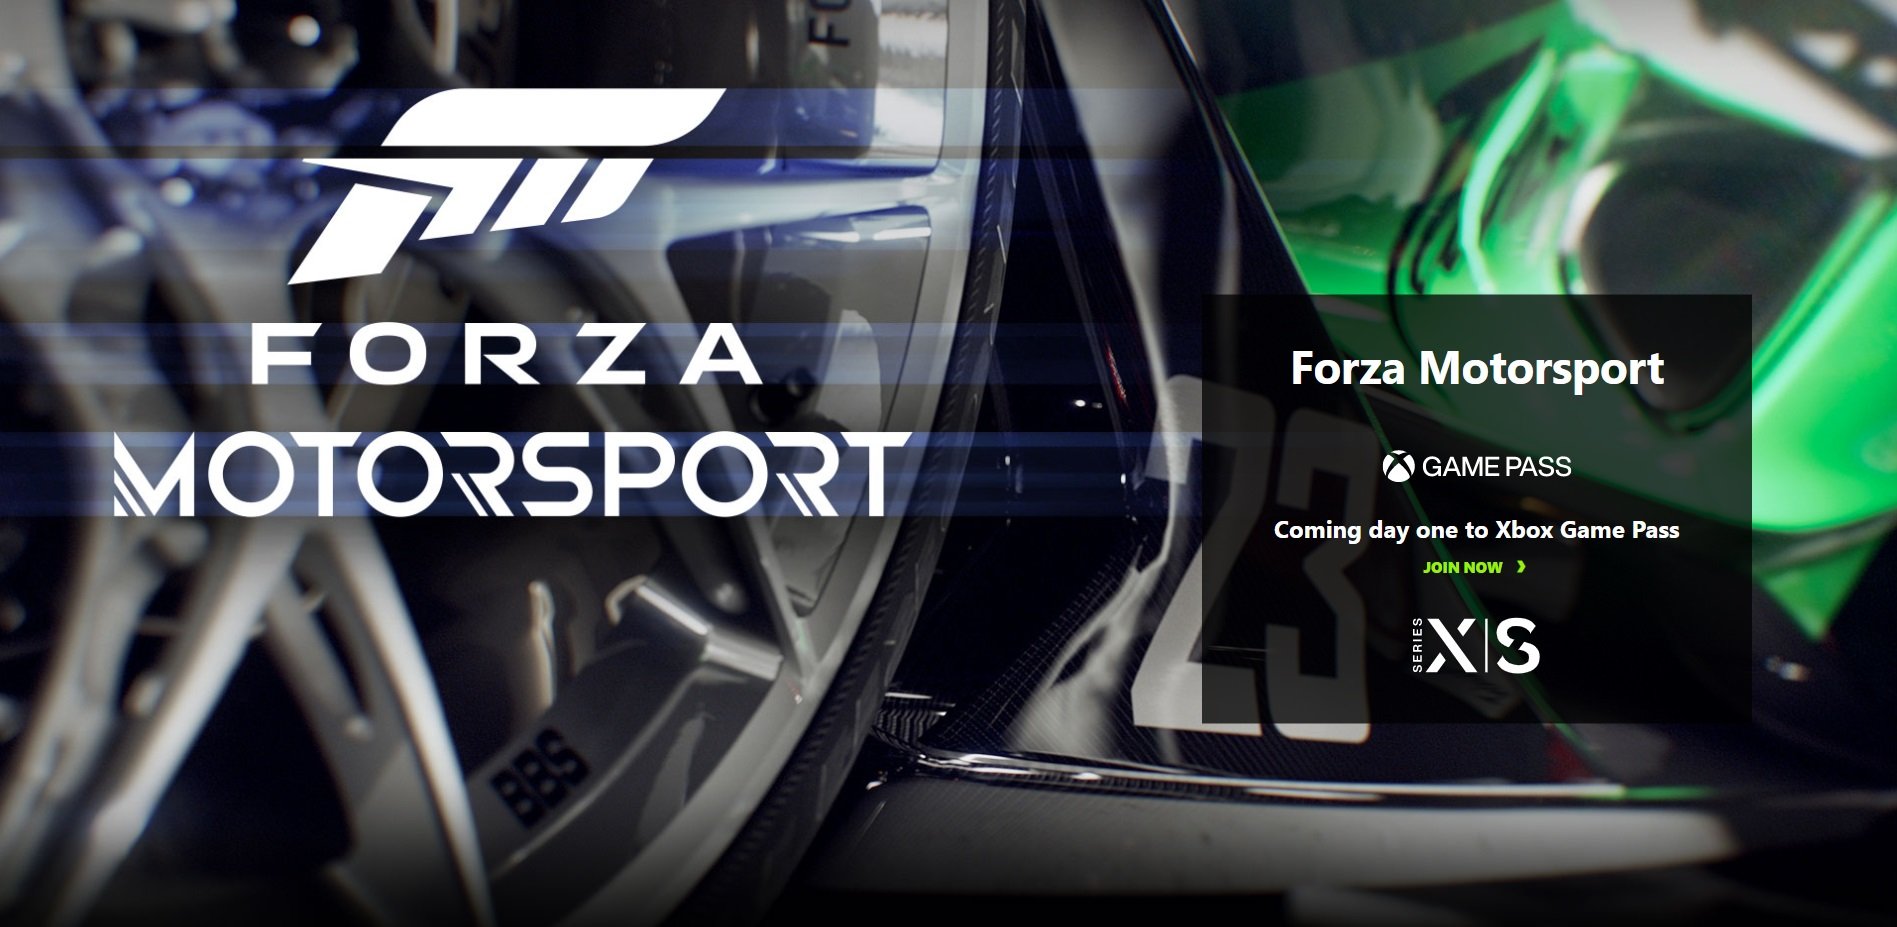 Forza Horizon 6 is Seemingly in Development, According to Job Listing